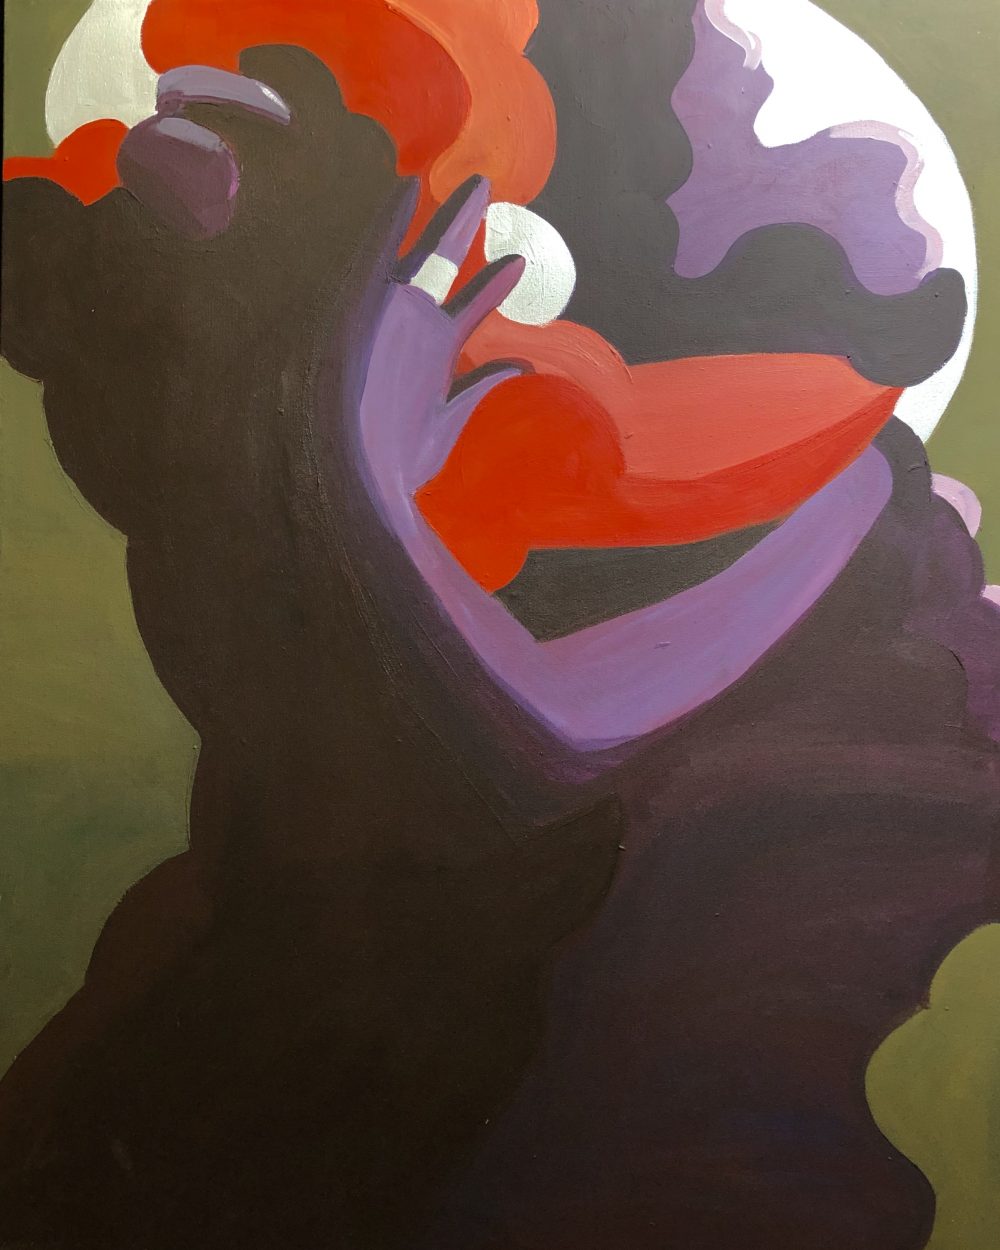 Lou Jenkins-Law, Secondary Embrace, 2019, acrylic on canvas, 30" x 24"